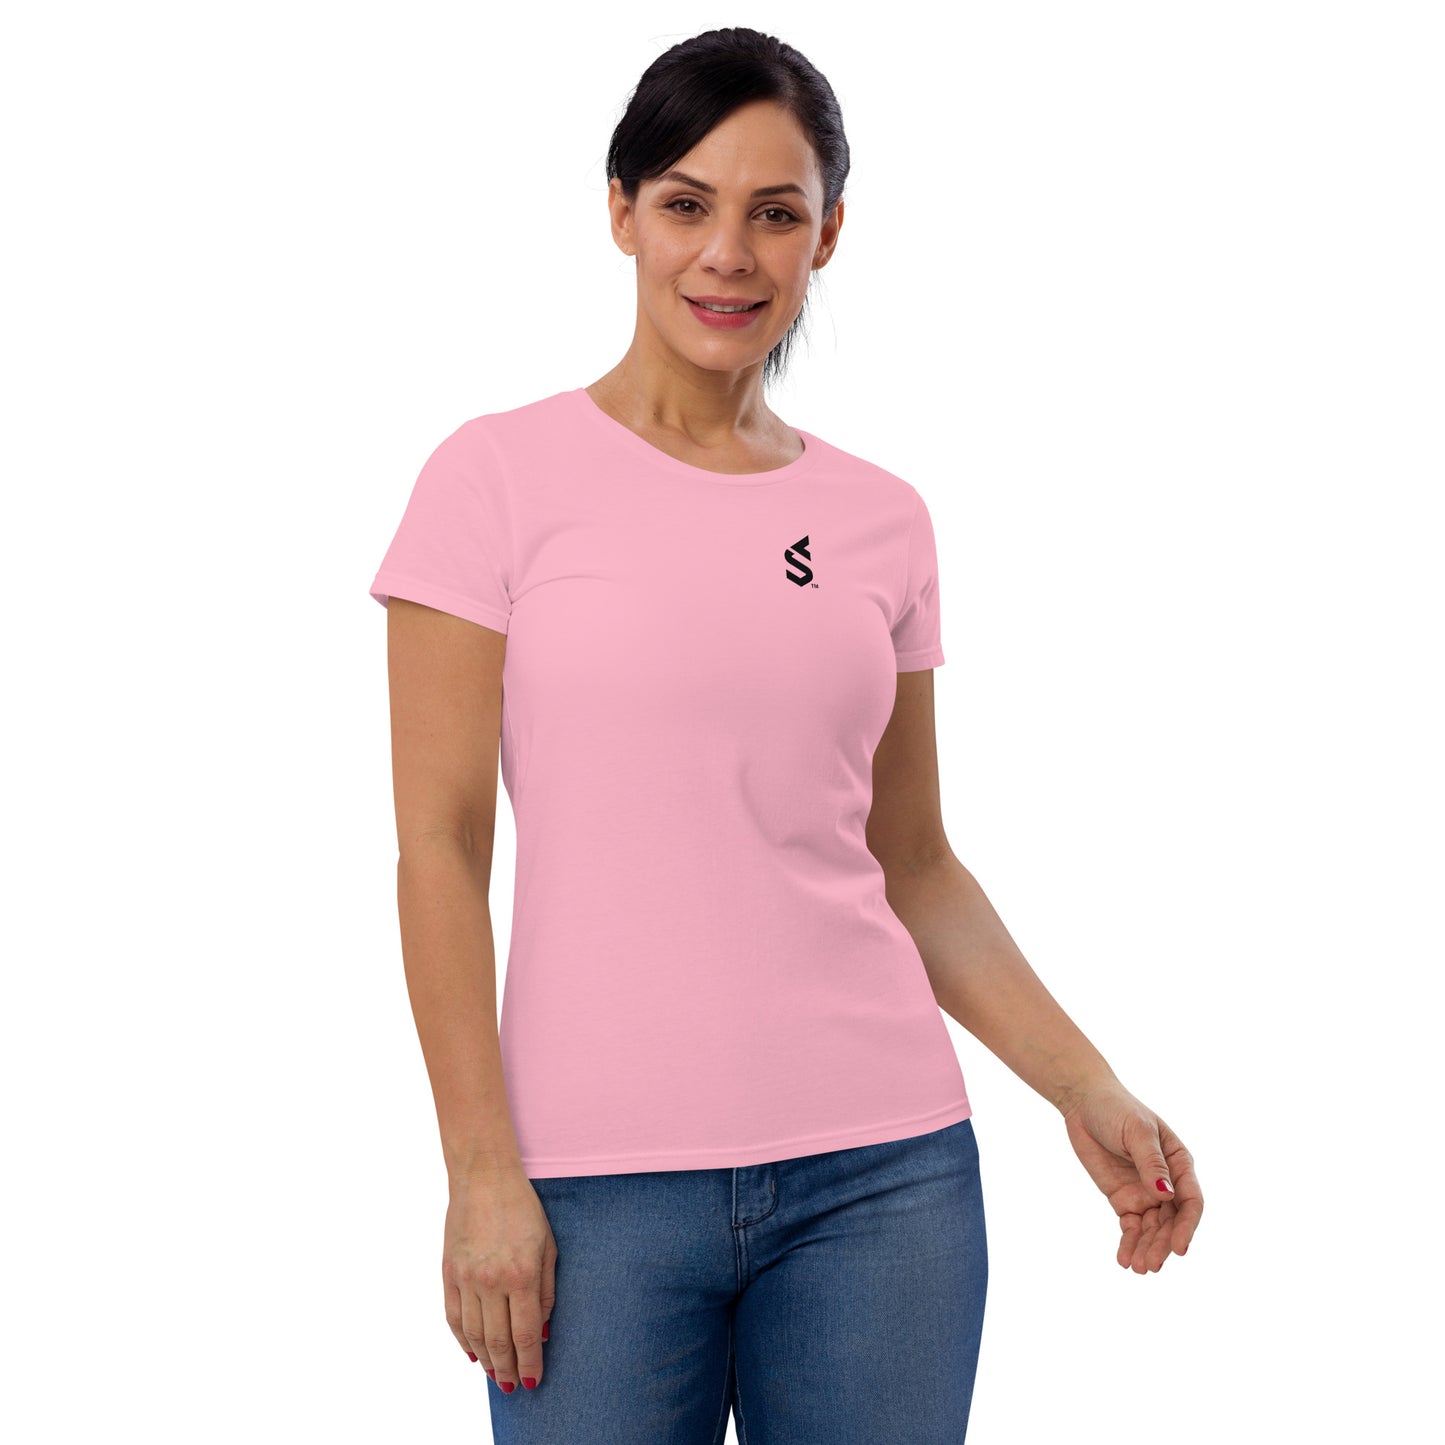 Sponsorless Women's short sleeve t-shirt